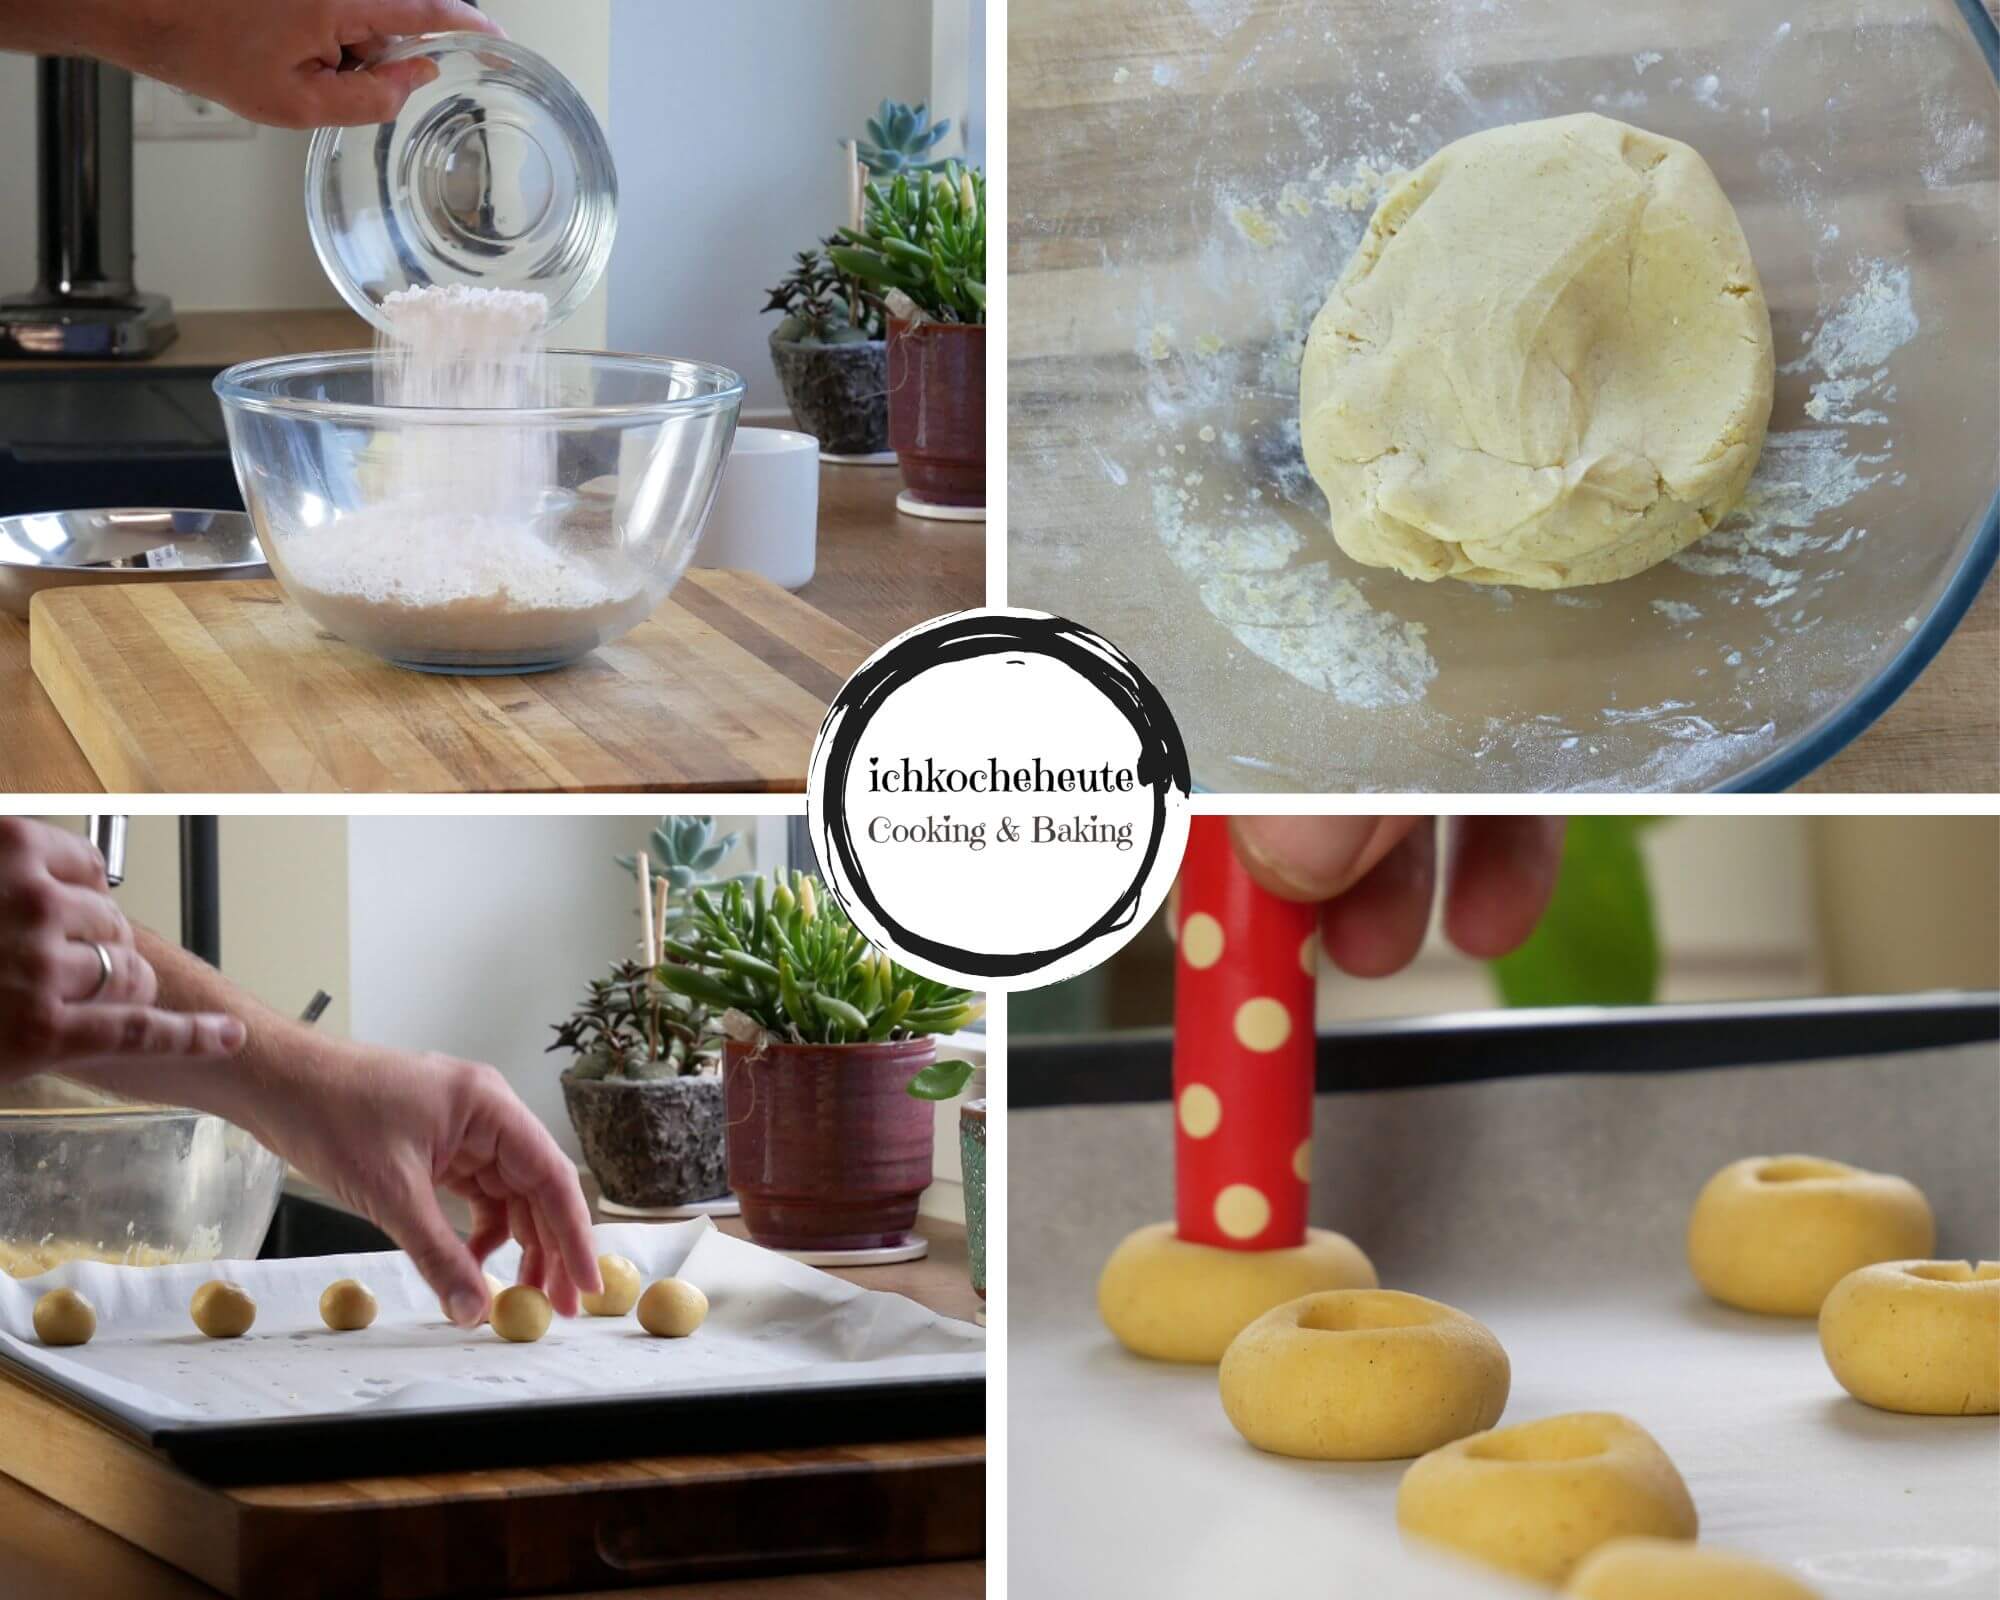 Preparing & Shaping Cookie Dough